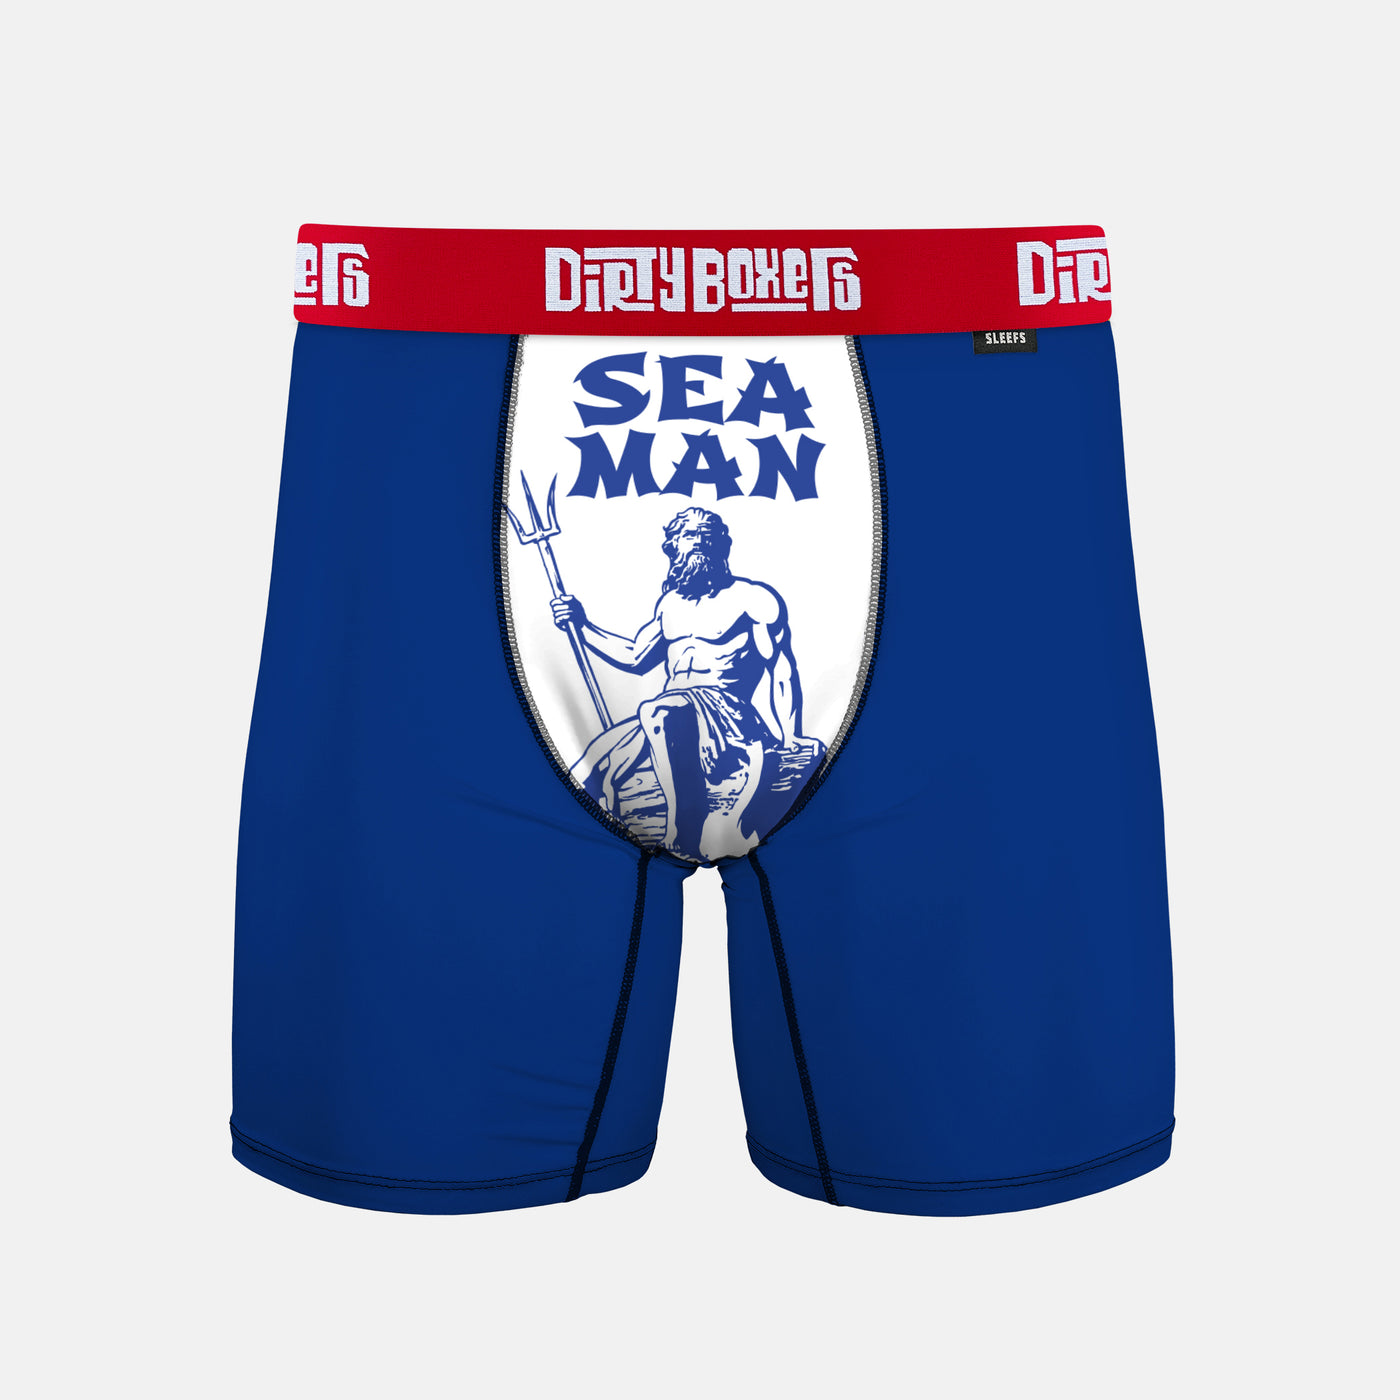 Seaman Dirty Boxers Men's Underwear